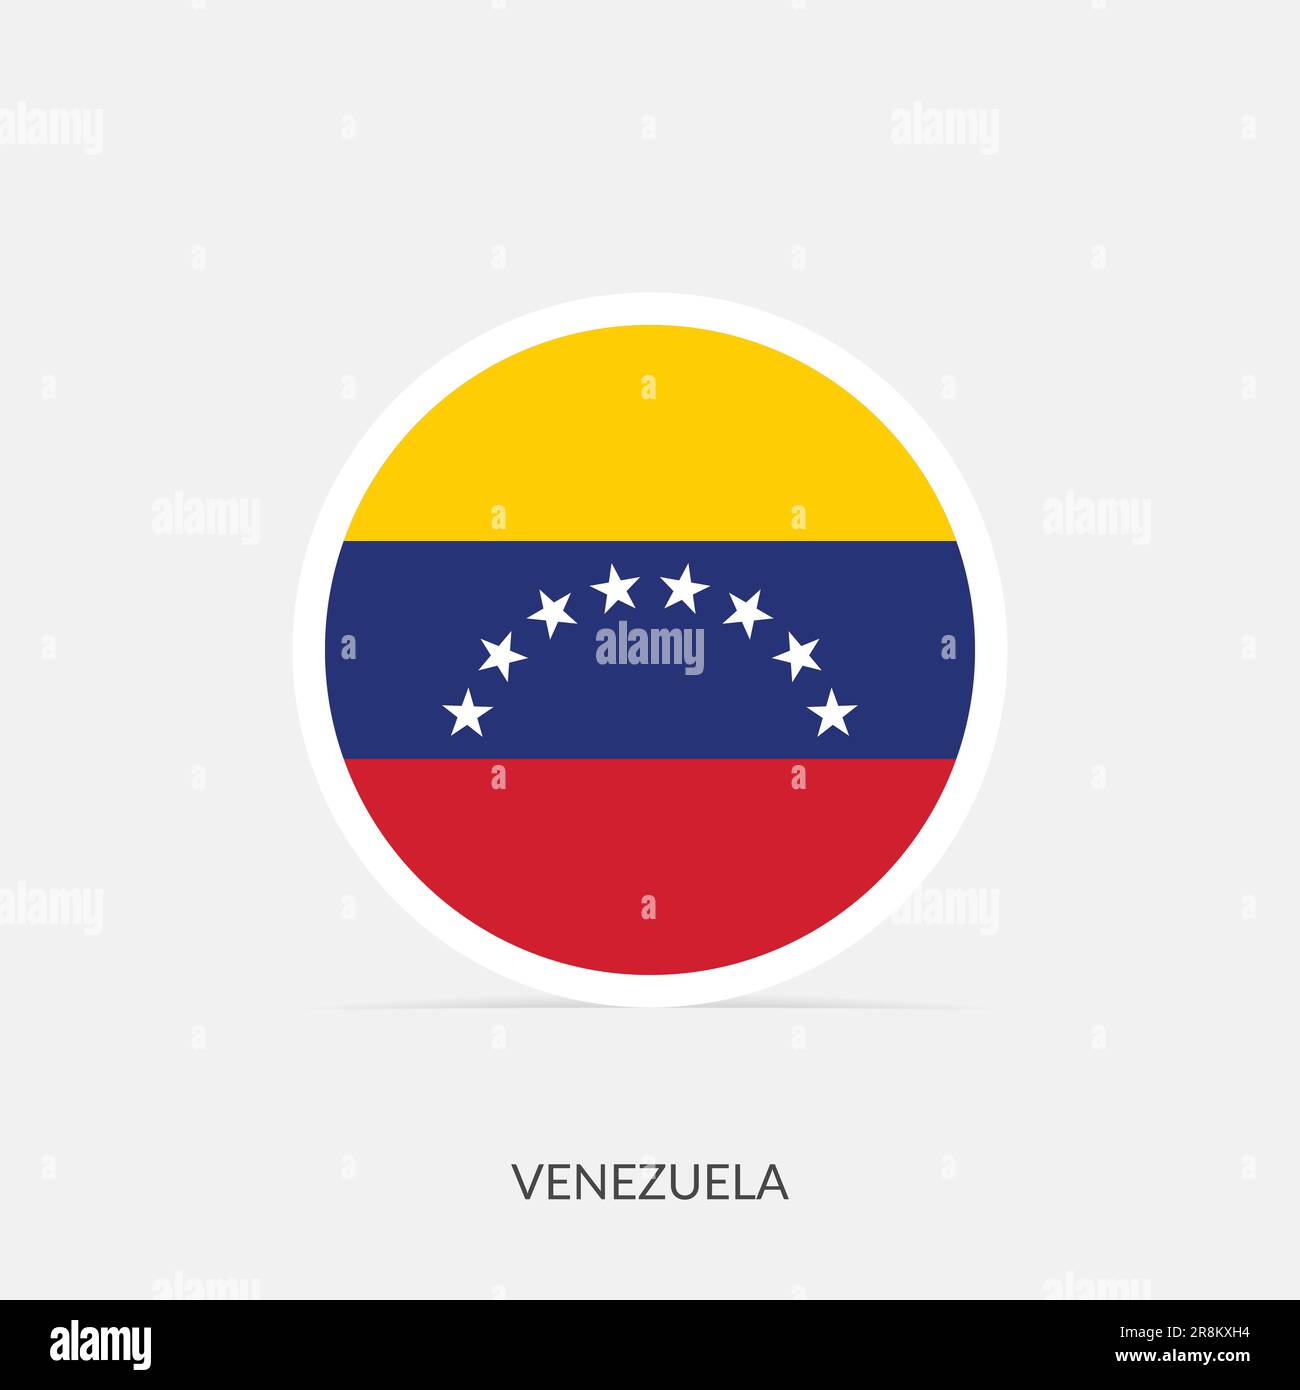 Venezuela round flag icon with shadow. Stock Vector